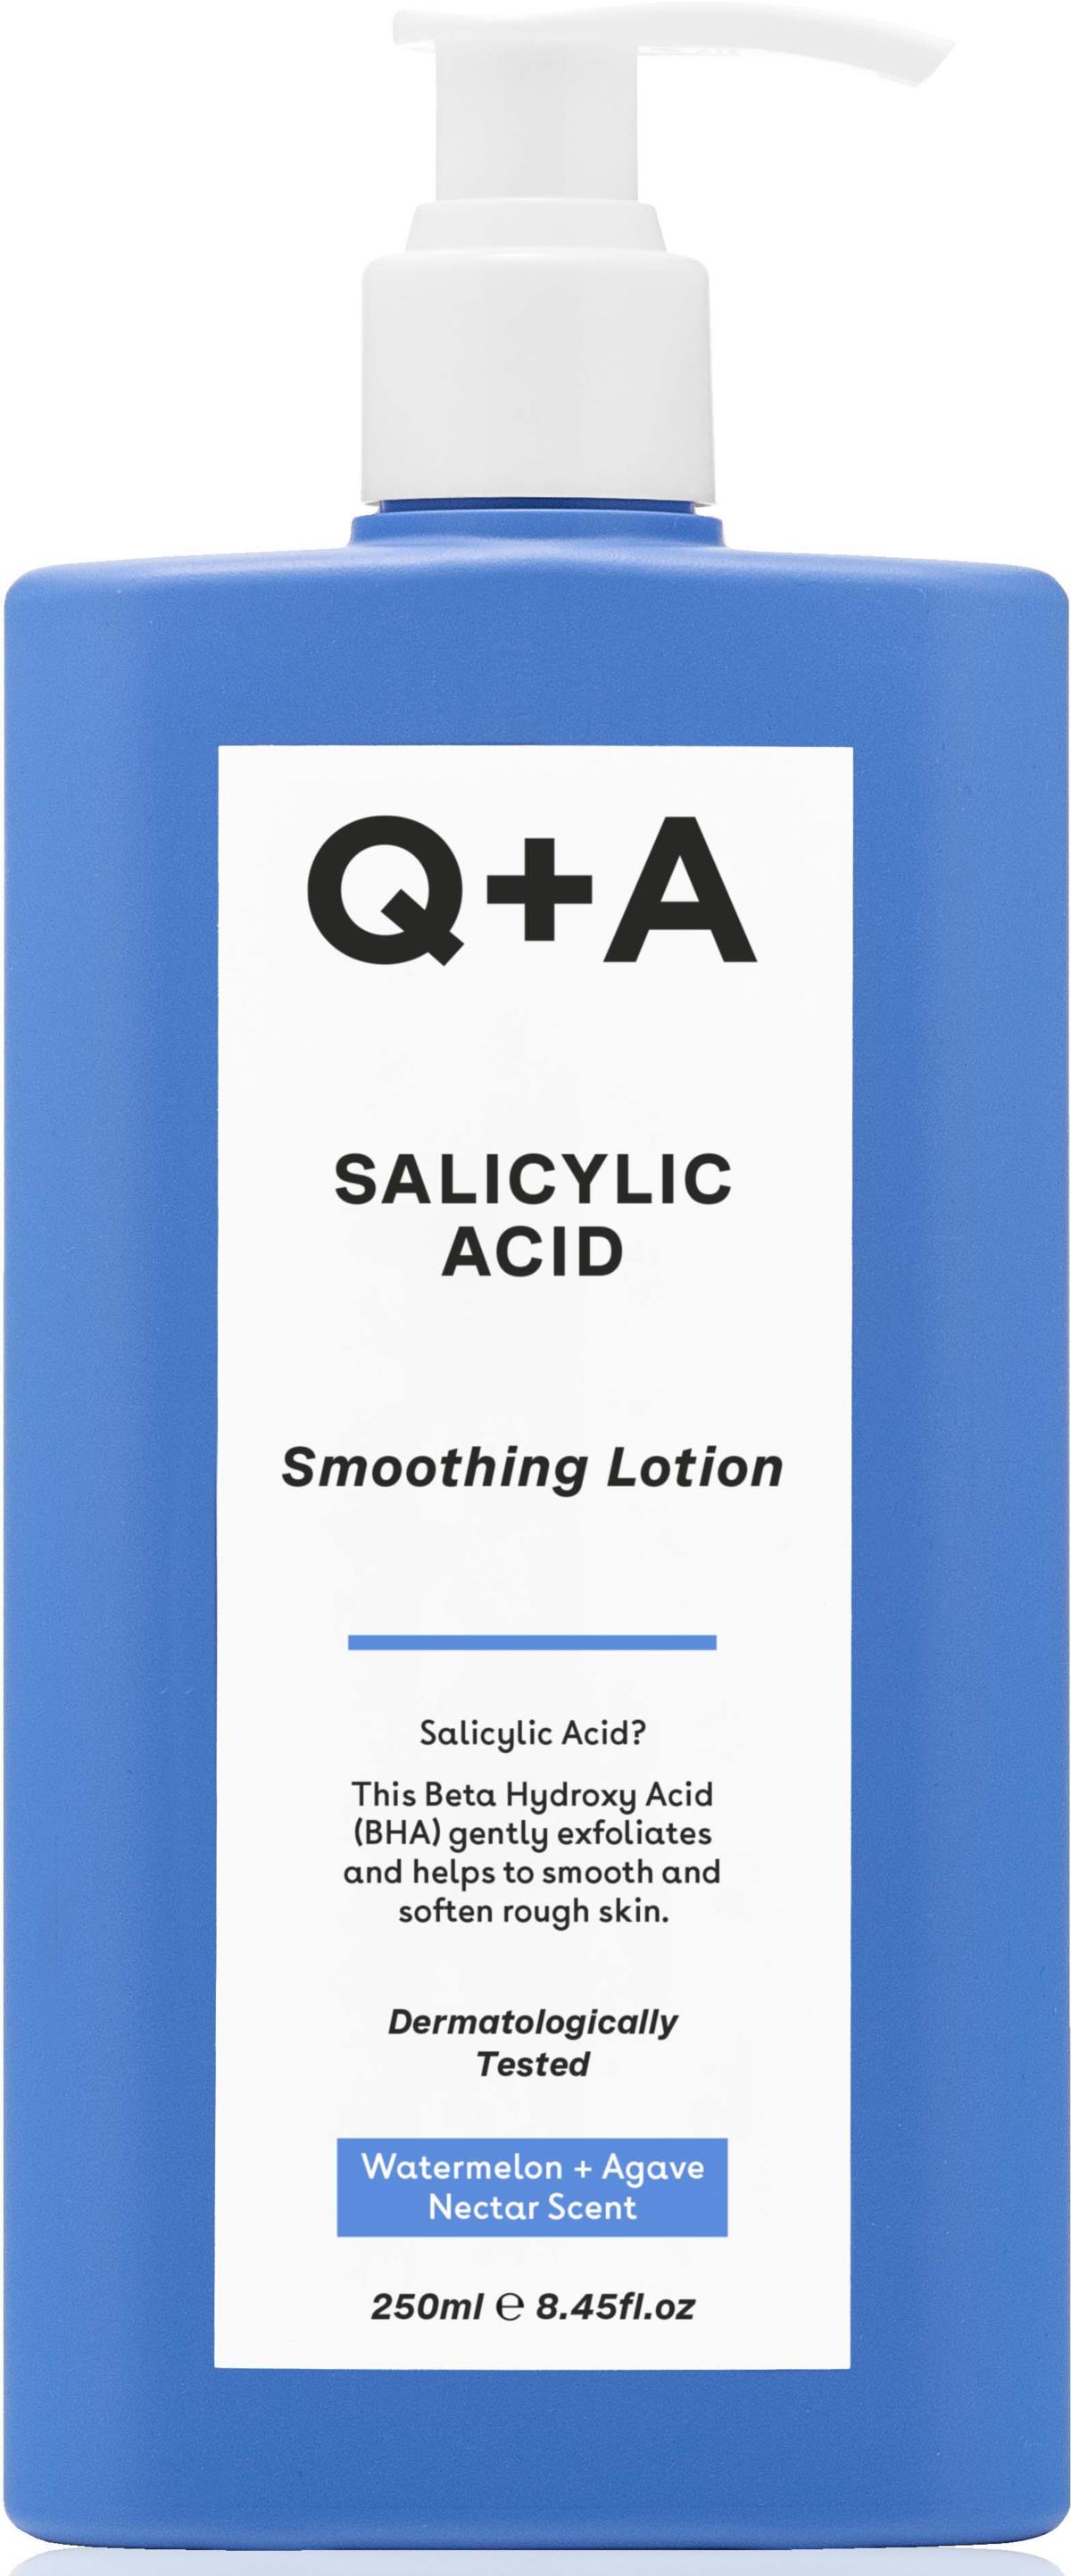 salicylic acid lotion